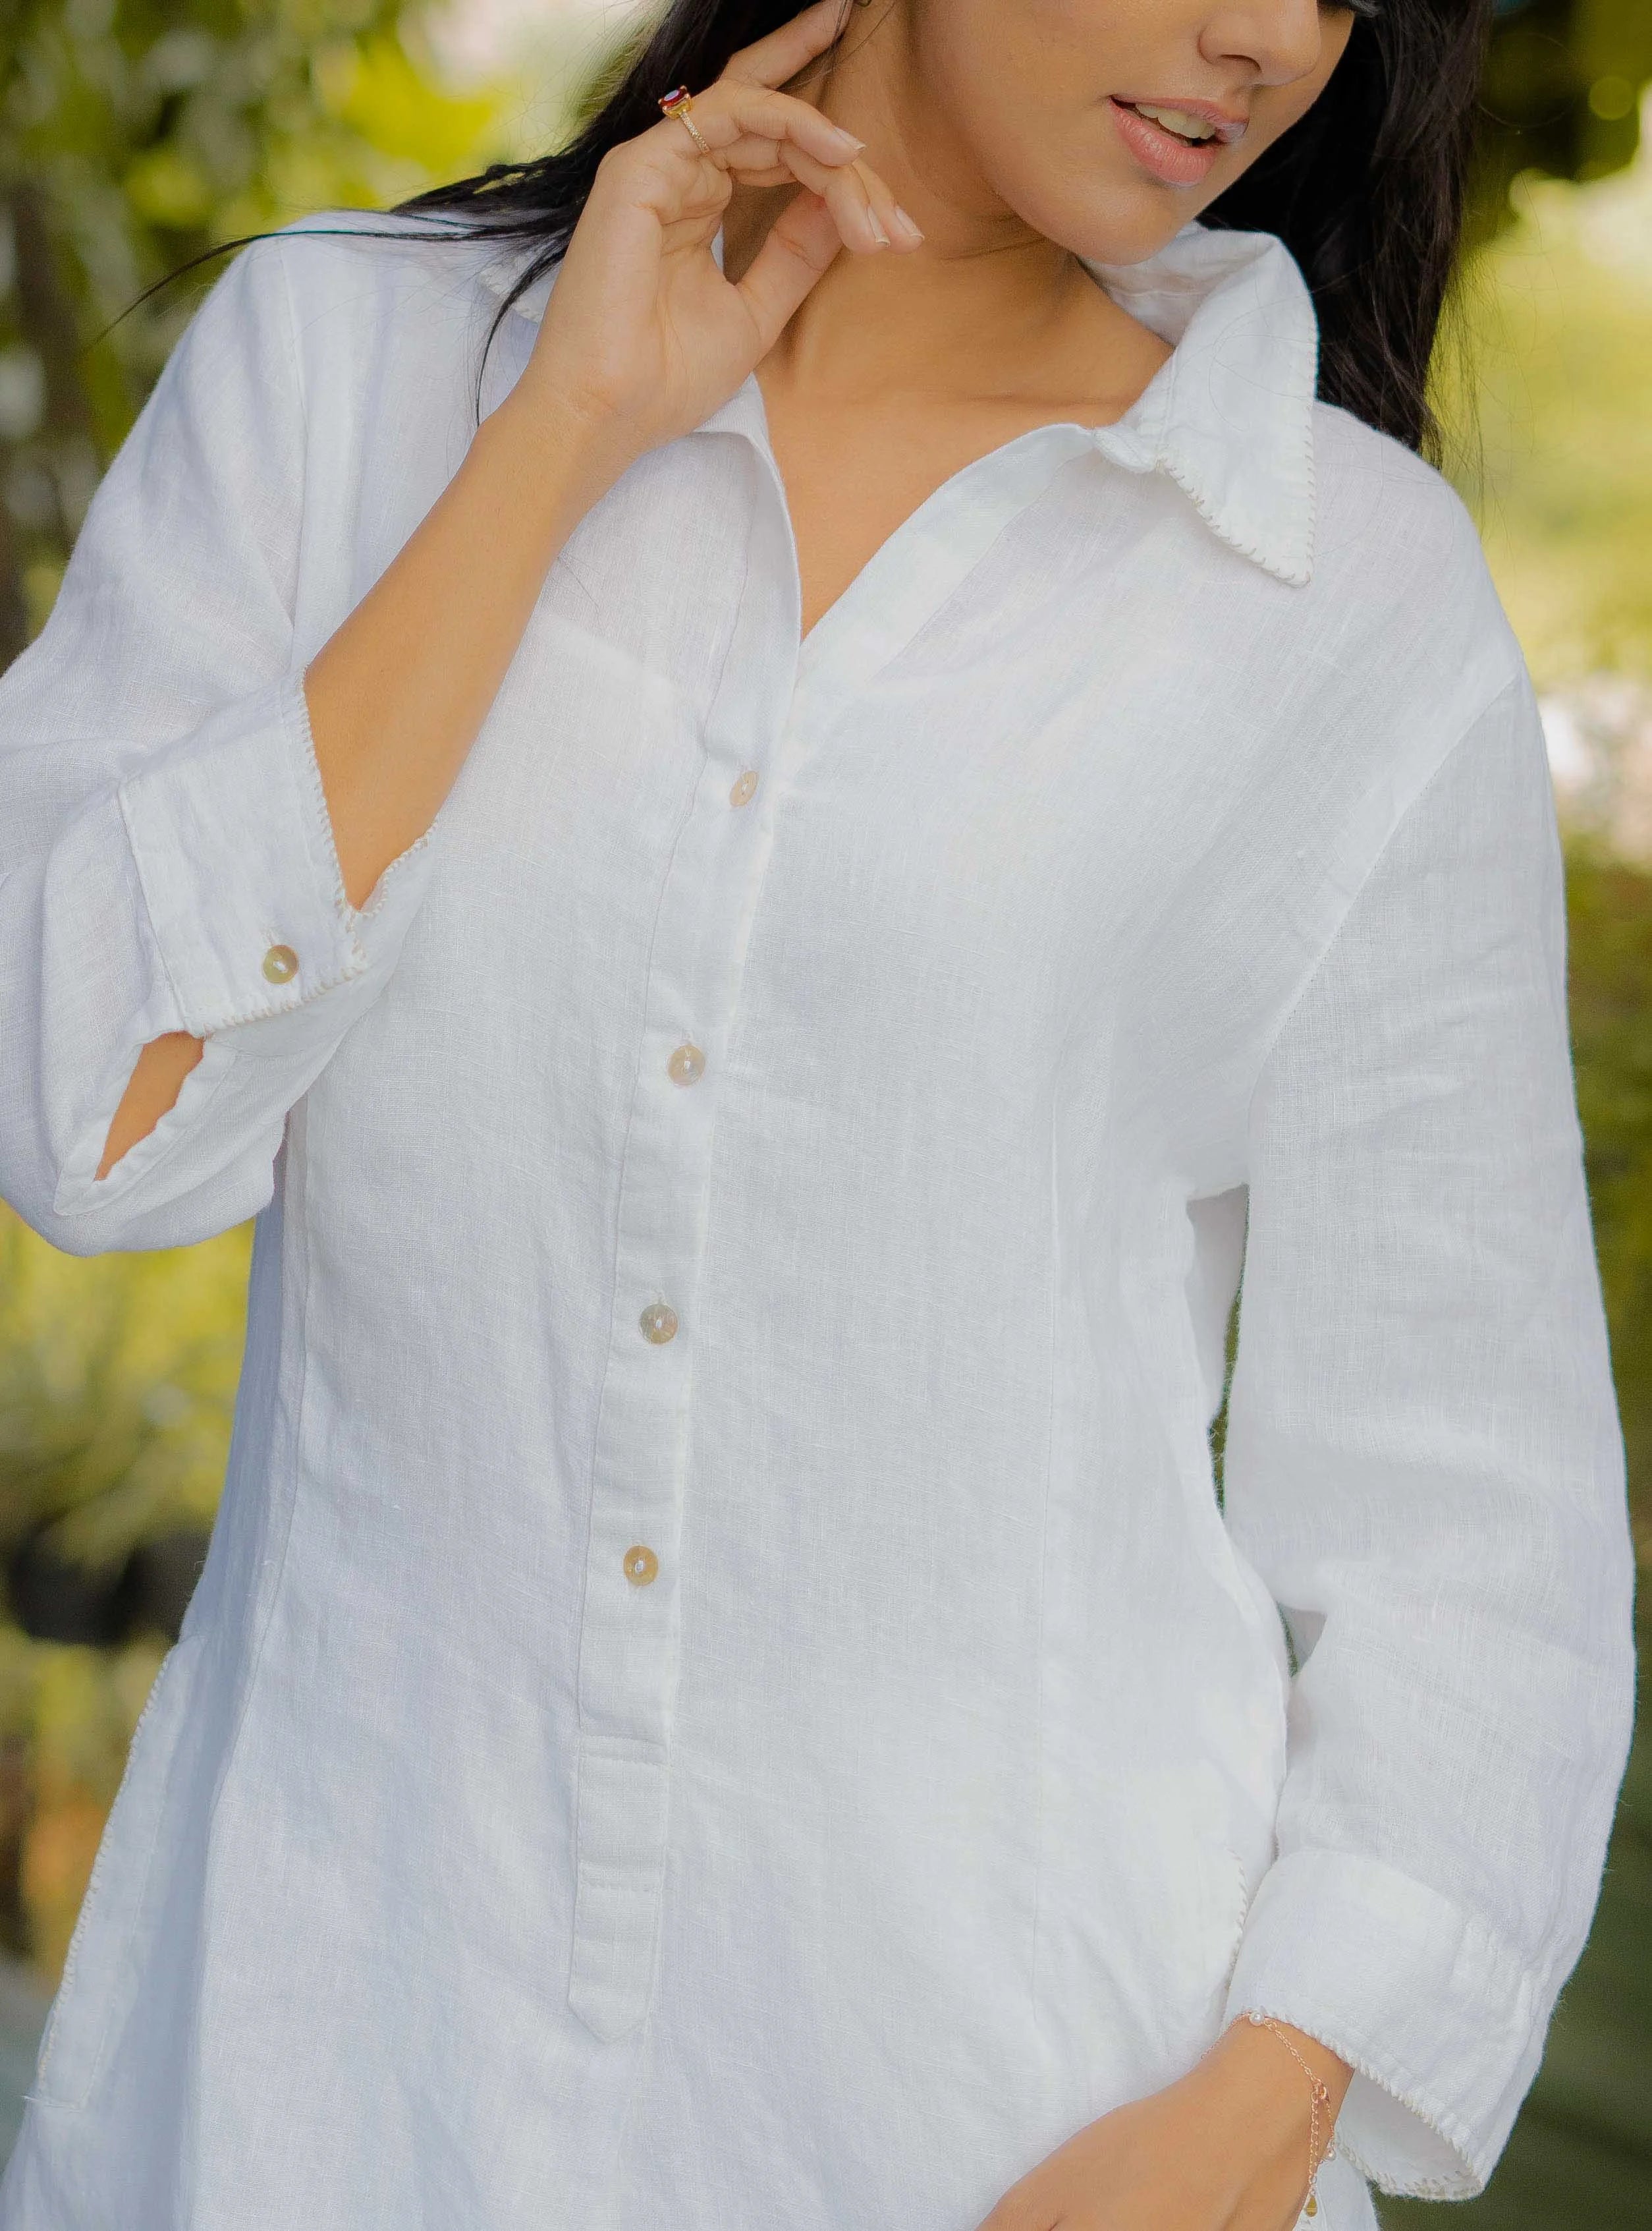 Shirt Dress White